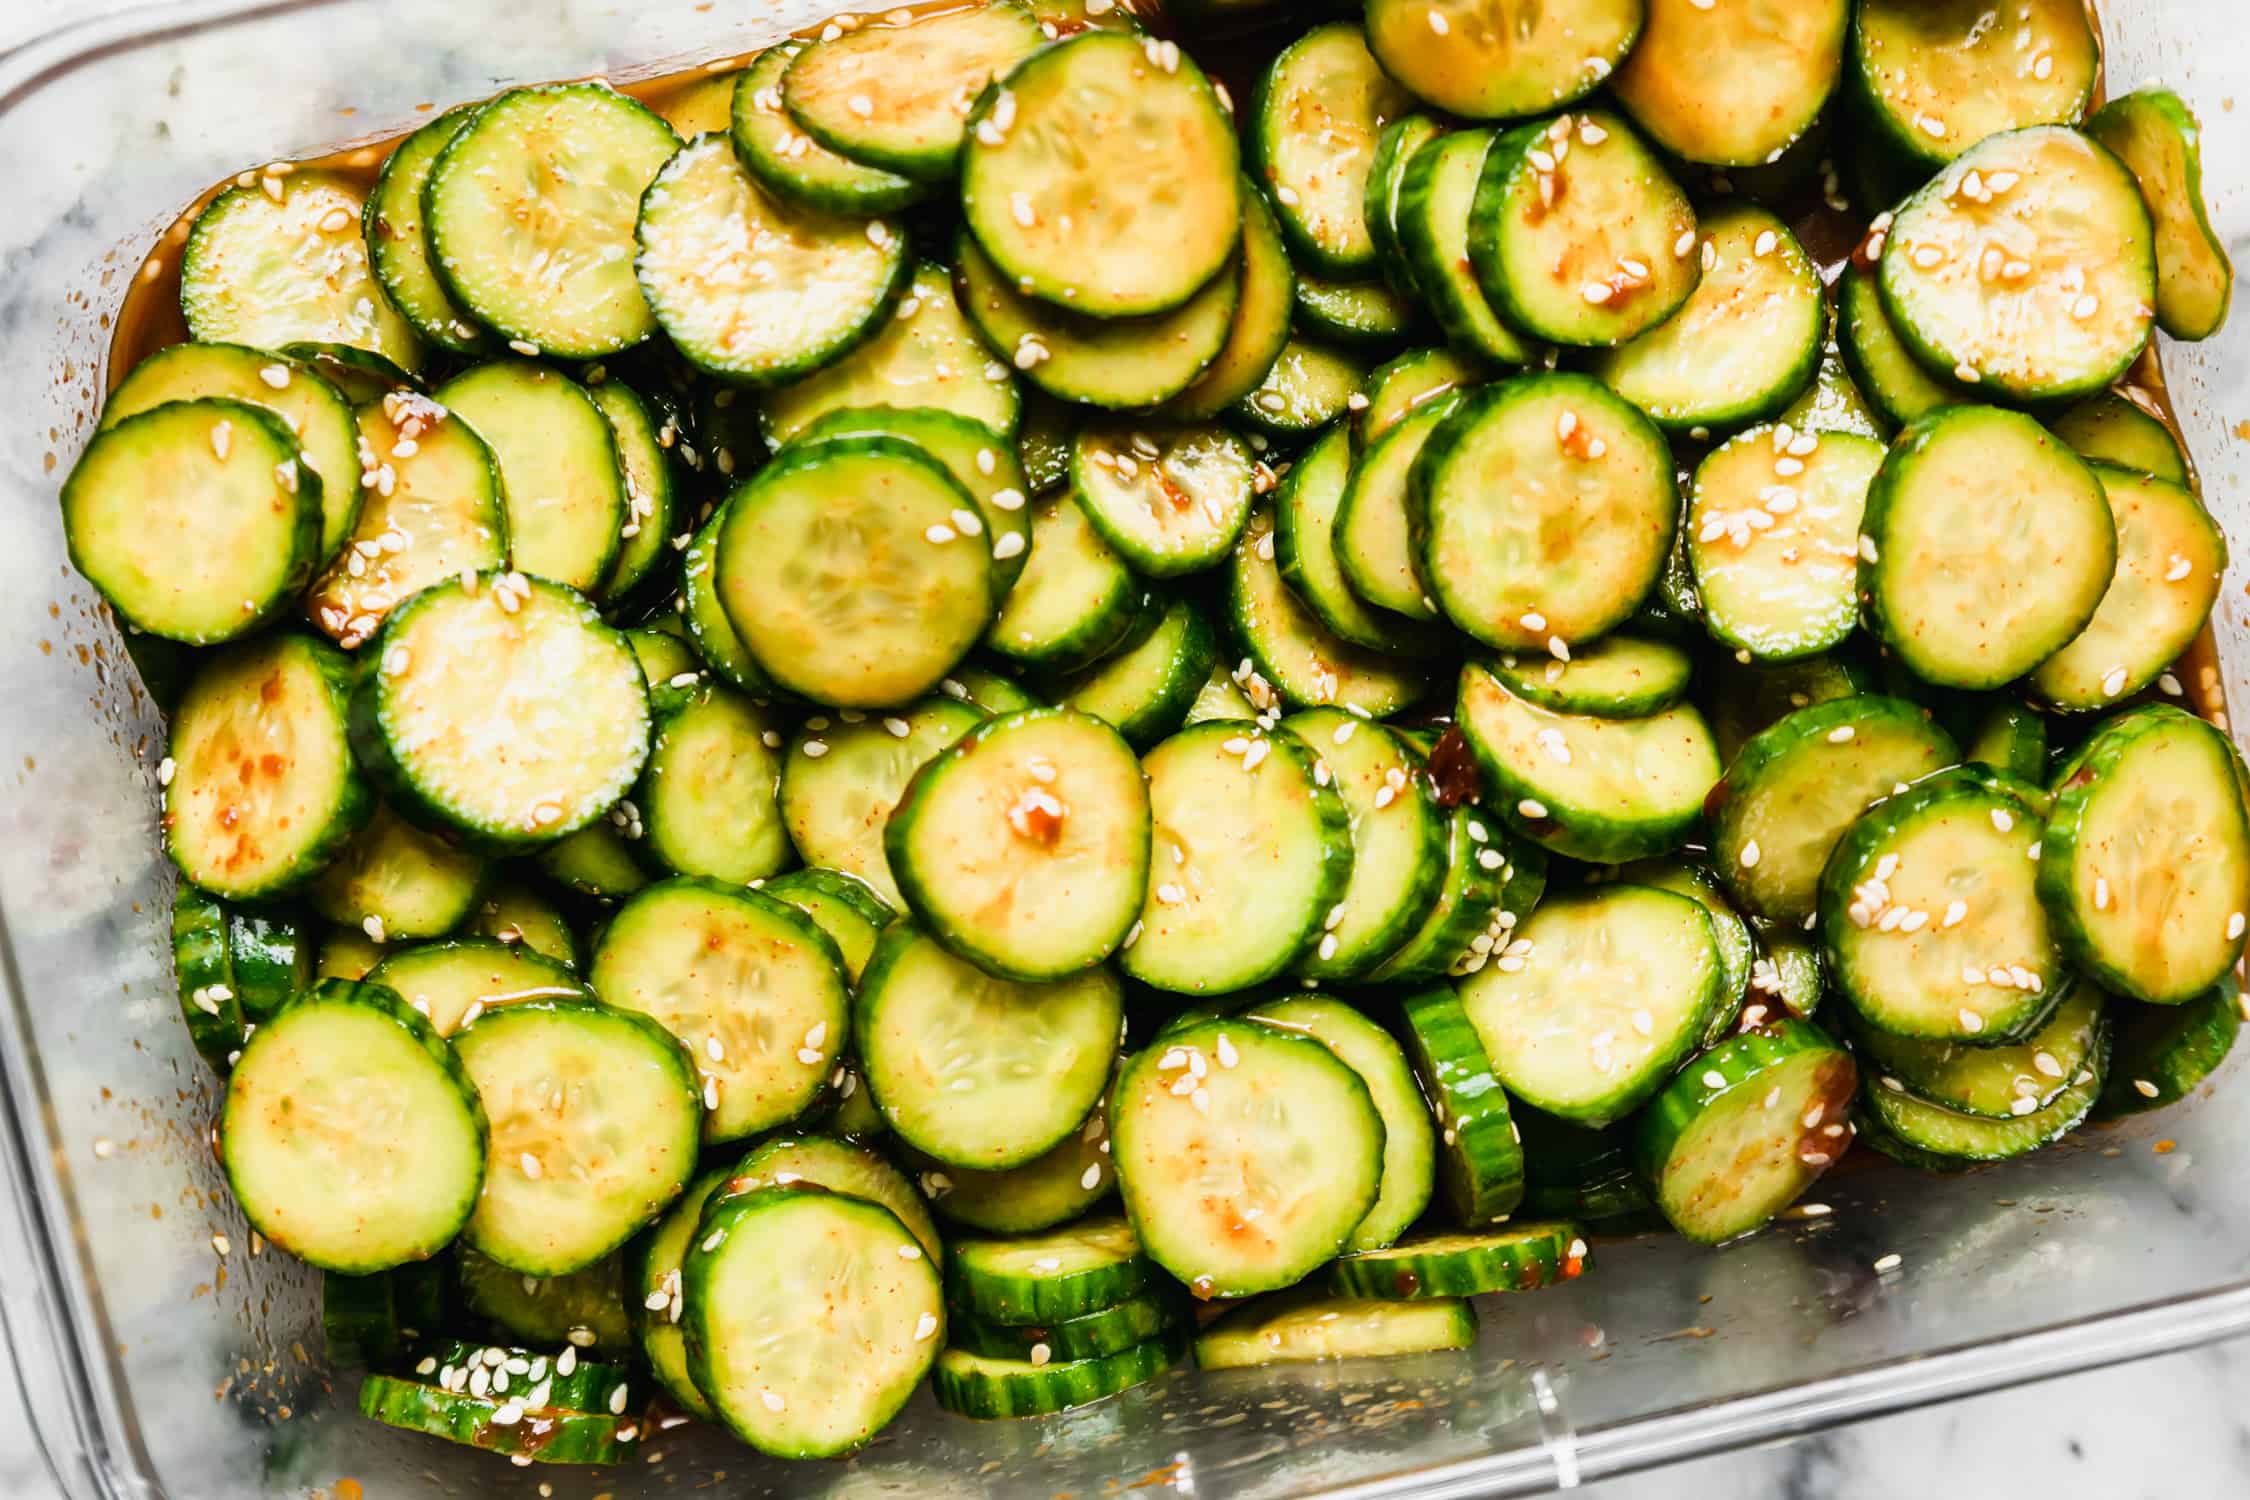 Korean cucumber salad in a large rectangular container